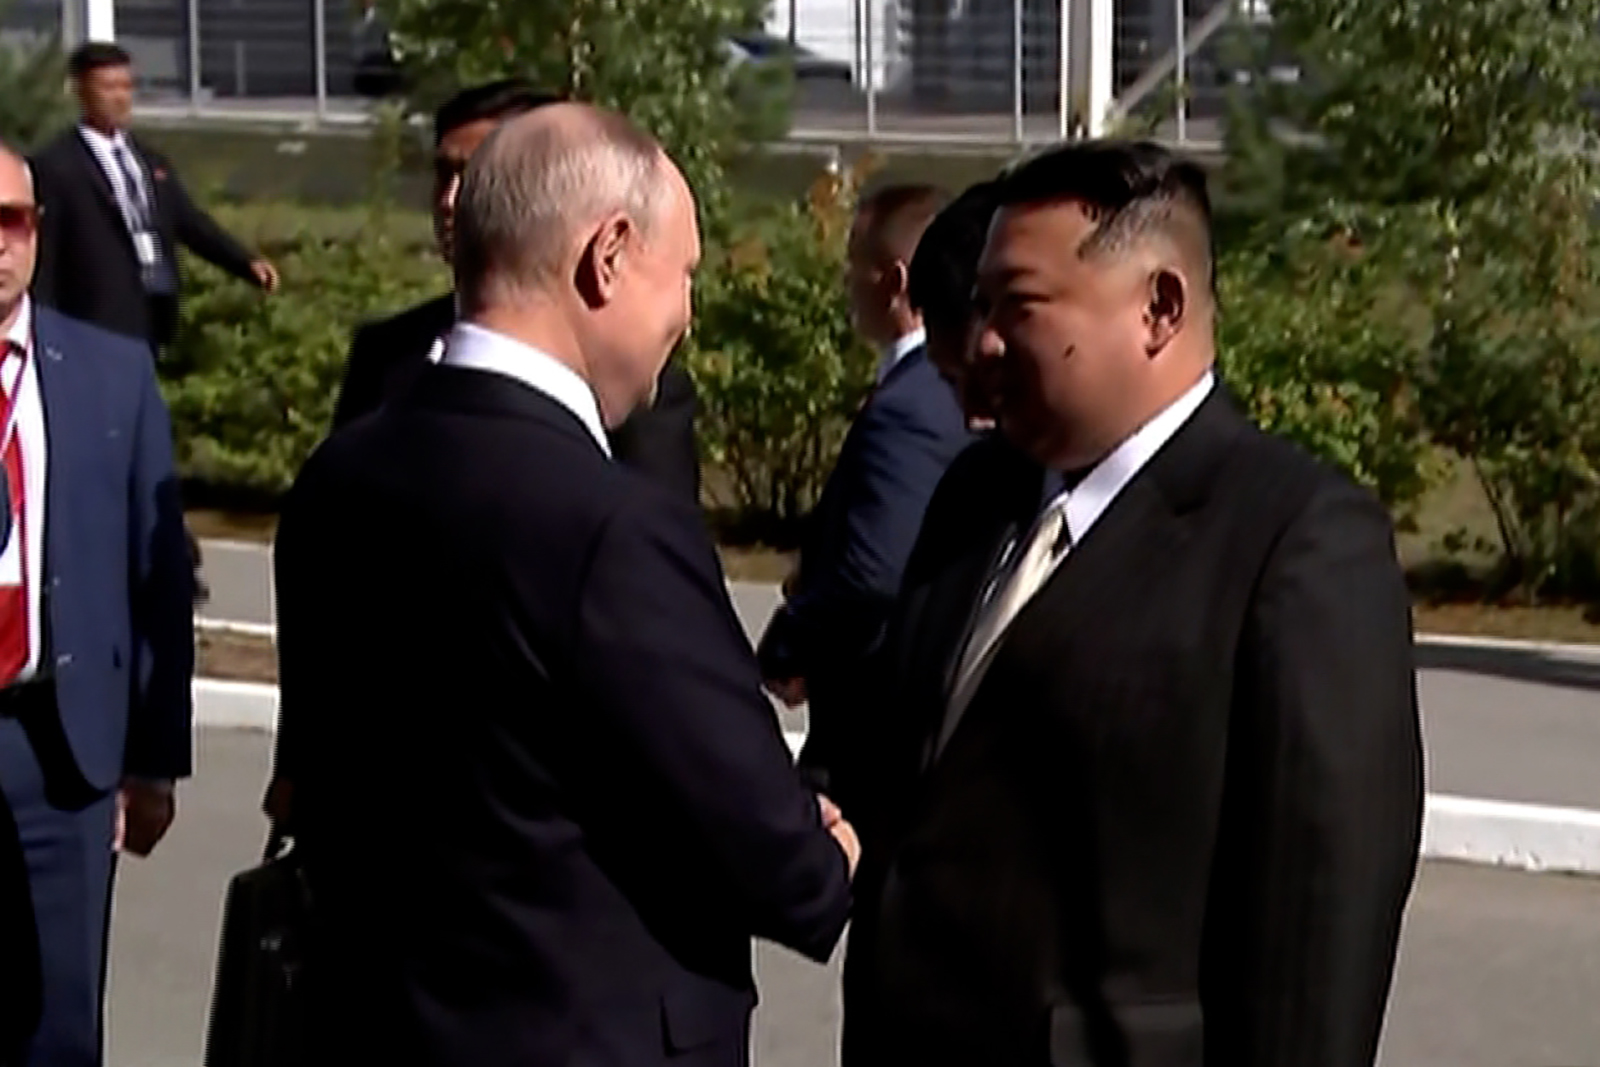 Kim Jong Un meets with Vladimir Putin in Amur province, Russia on September 13.